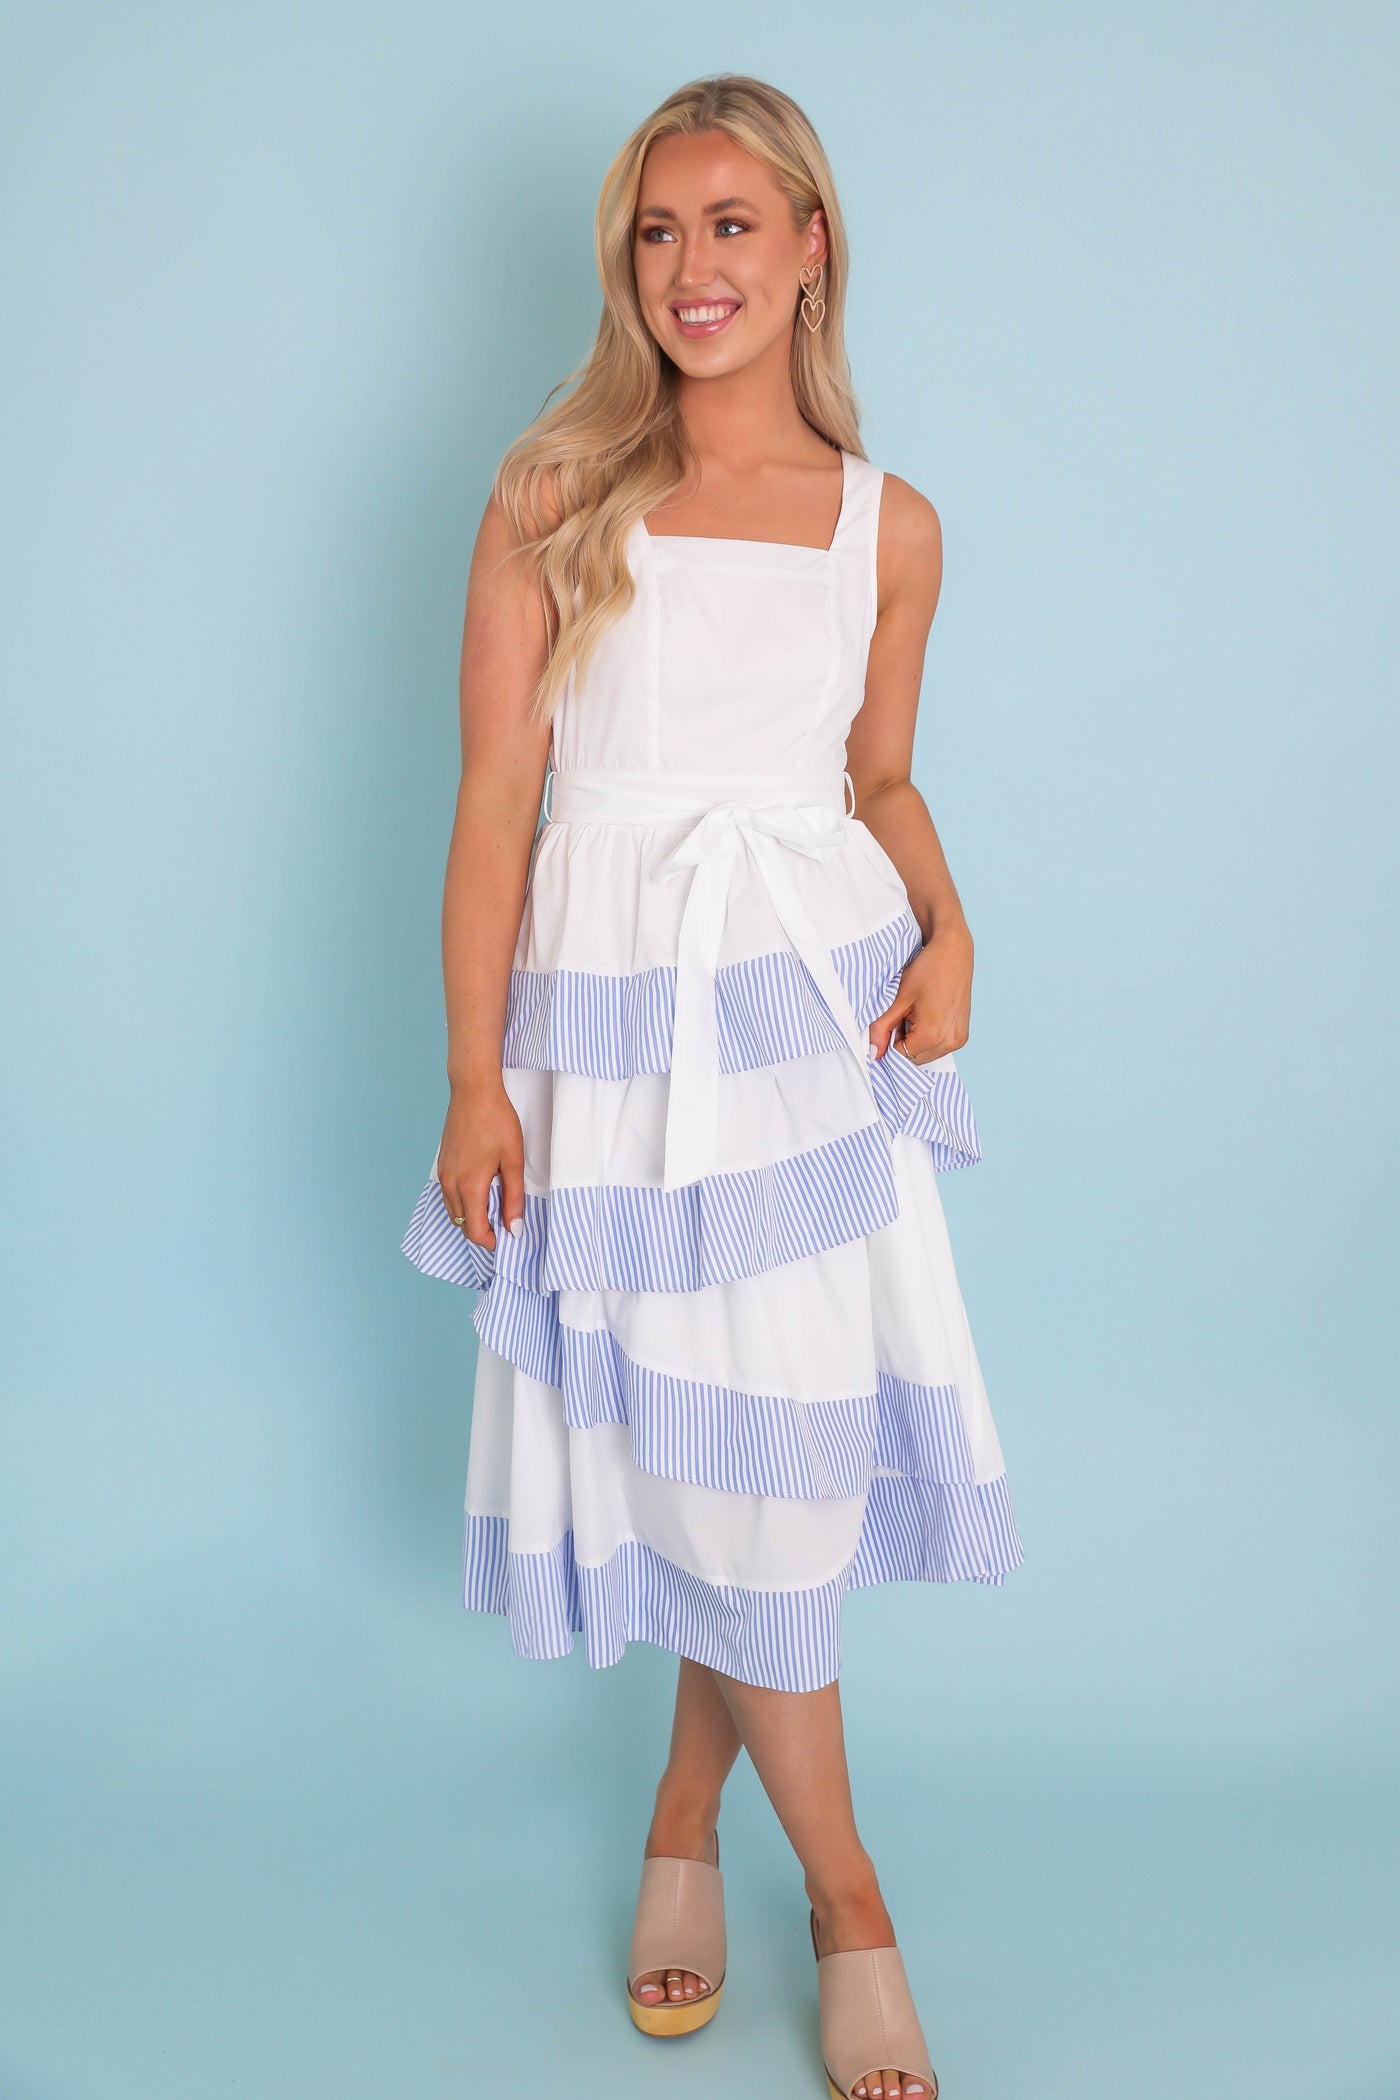 Women's Blue And White Striped Midi Dress- Women's Preppy Midi Dresses- Entro White Midi Dress